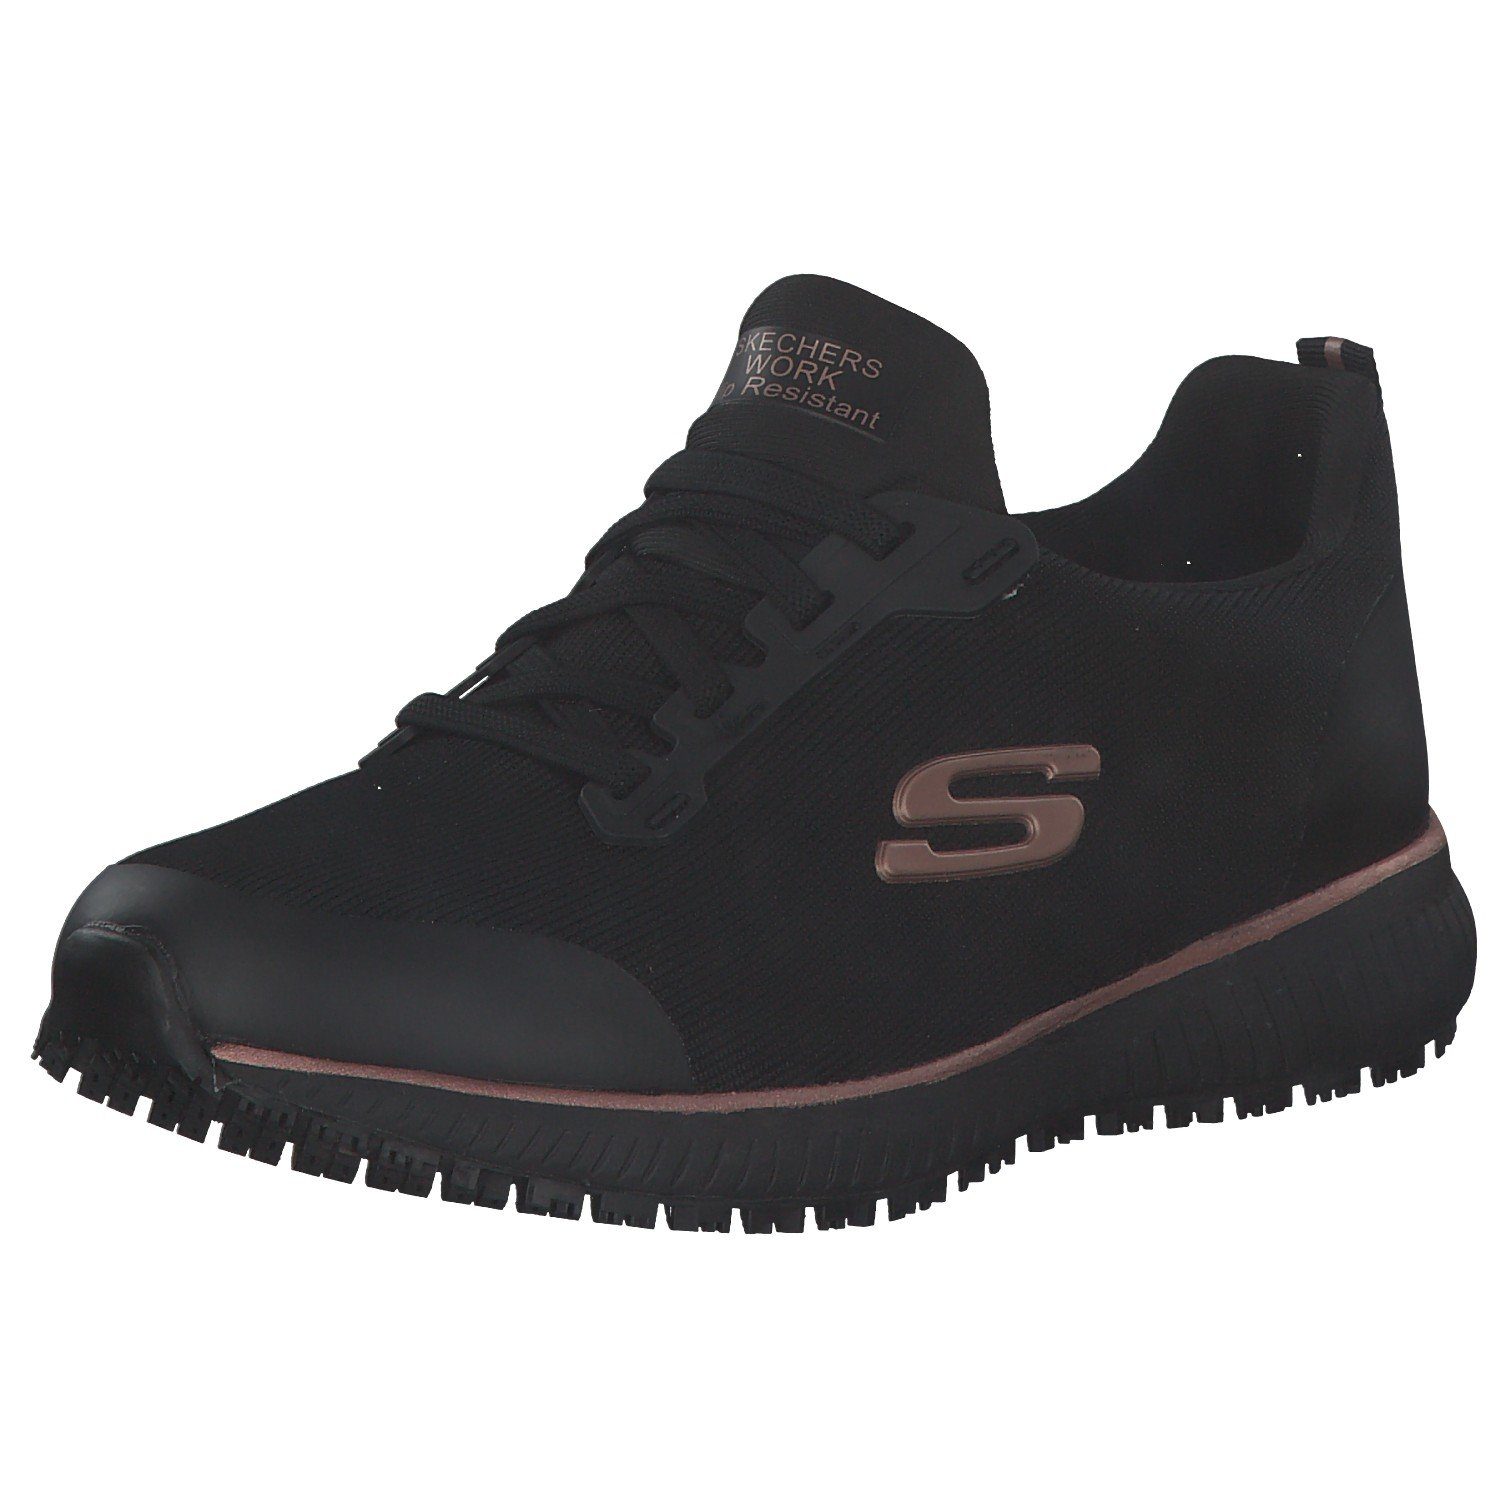 Sneaker Skechers gold (20202781) black Skechers 77222EC rose BKRG